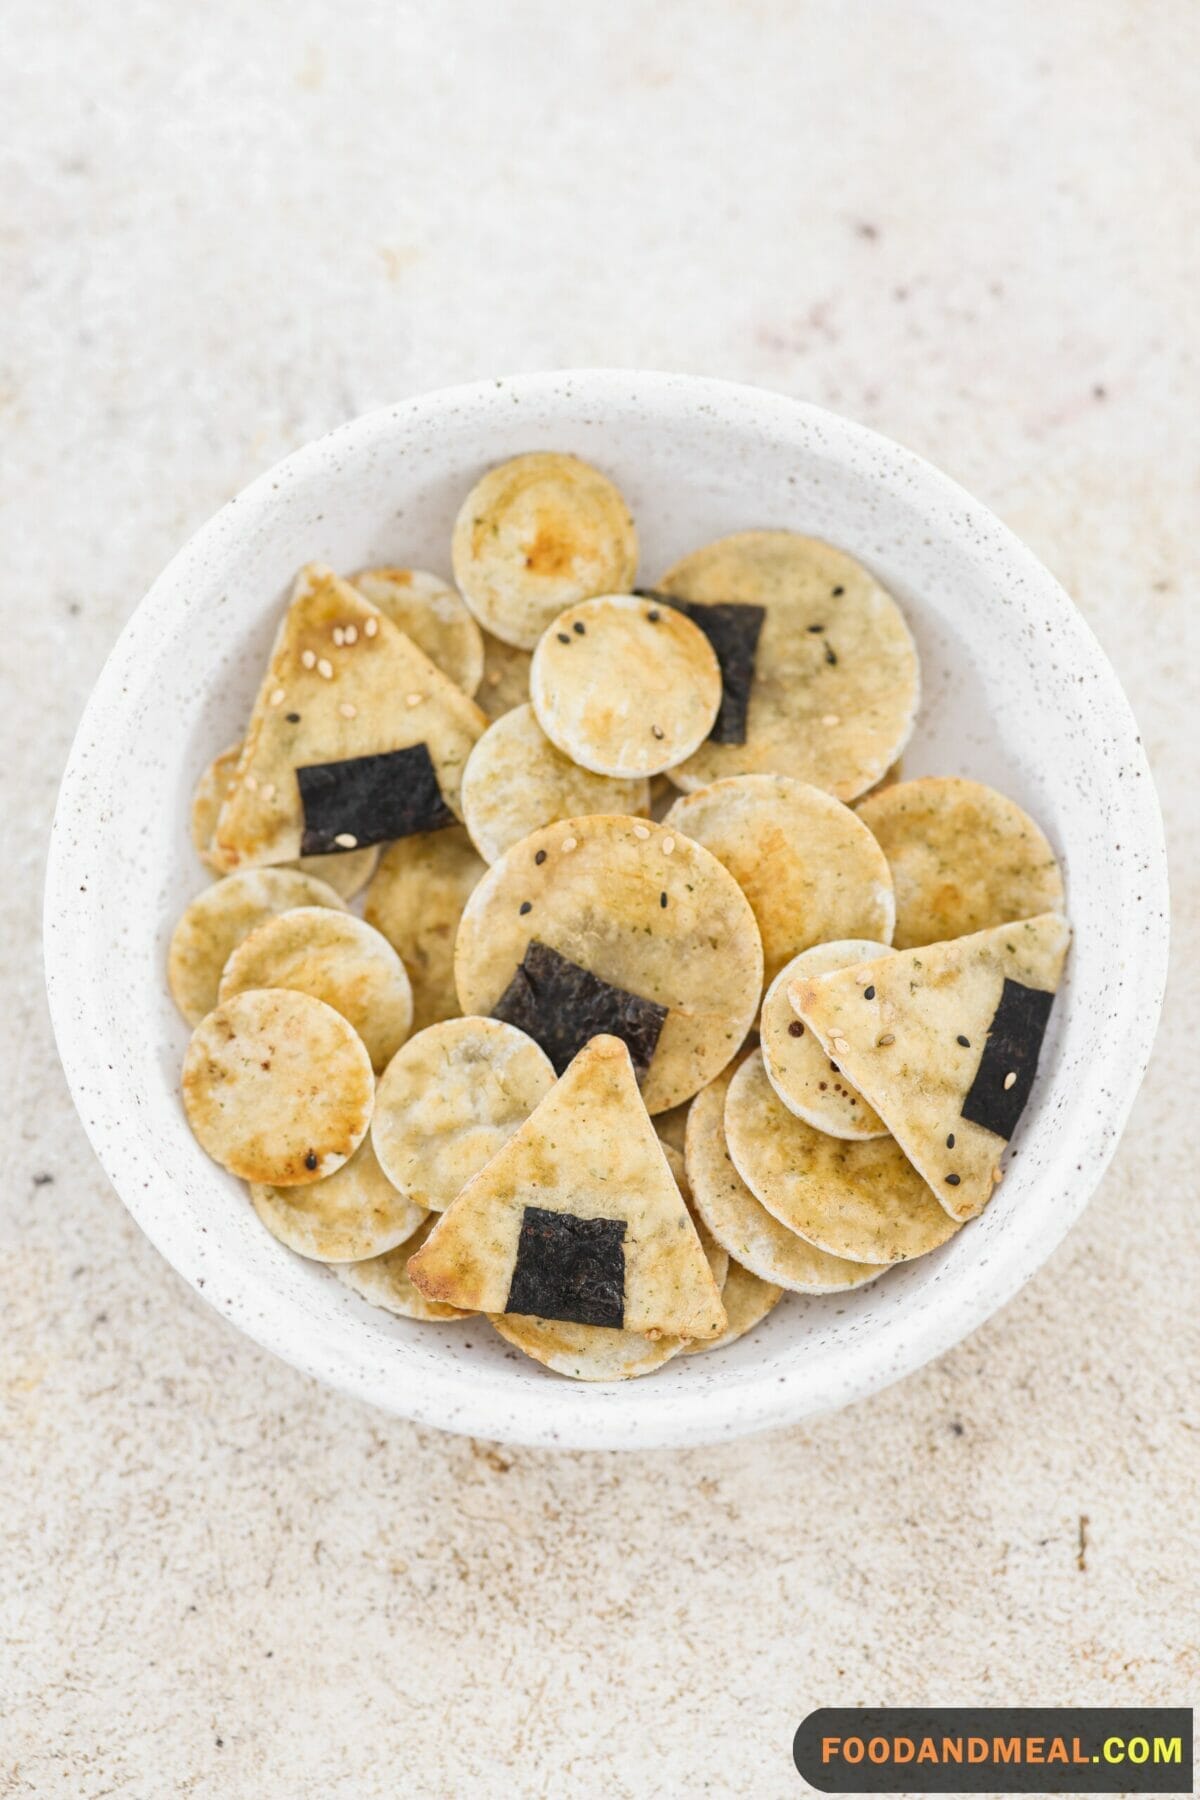 Easy-To-Make Senbei Rice Crackers Recipe